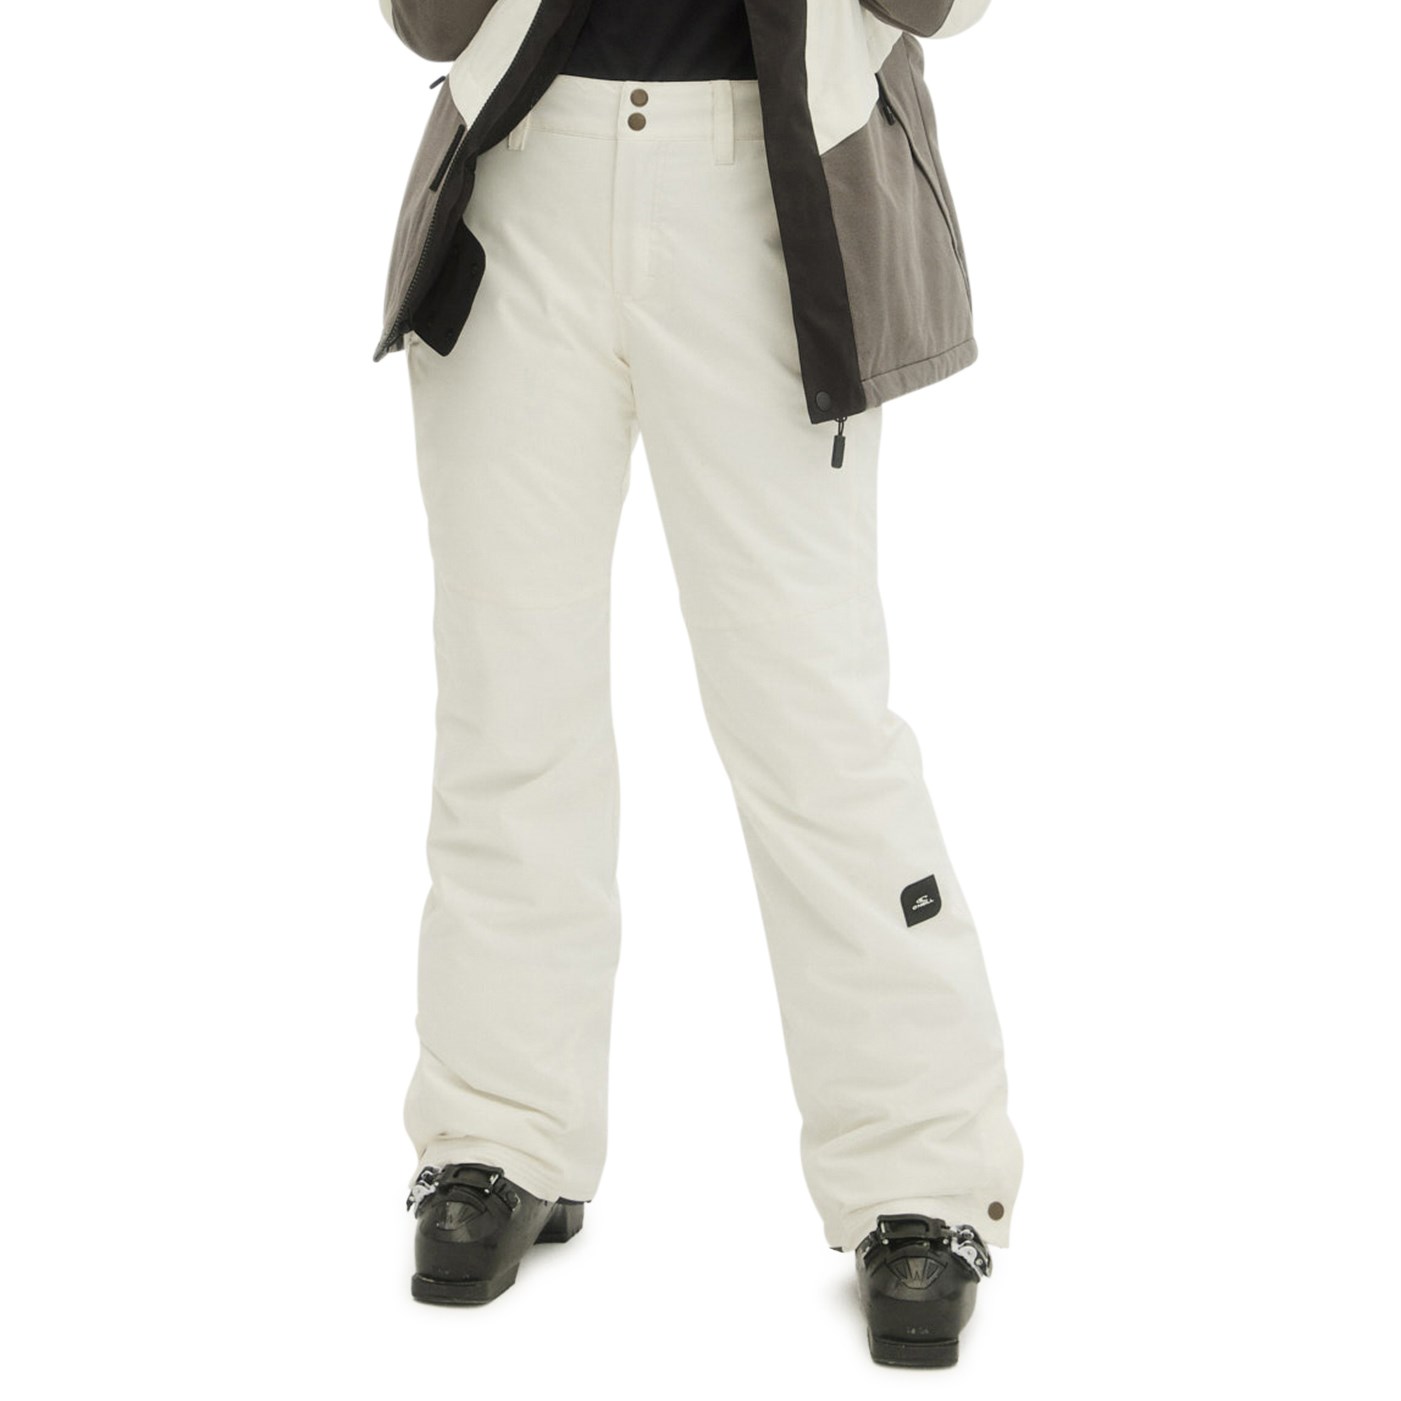 Black BNWT O'Neill Star Slim Fit Snow Pants Womens Ski Red or Navy RRP £115 